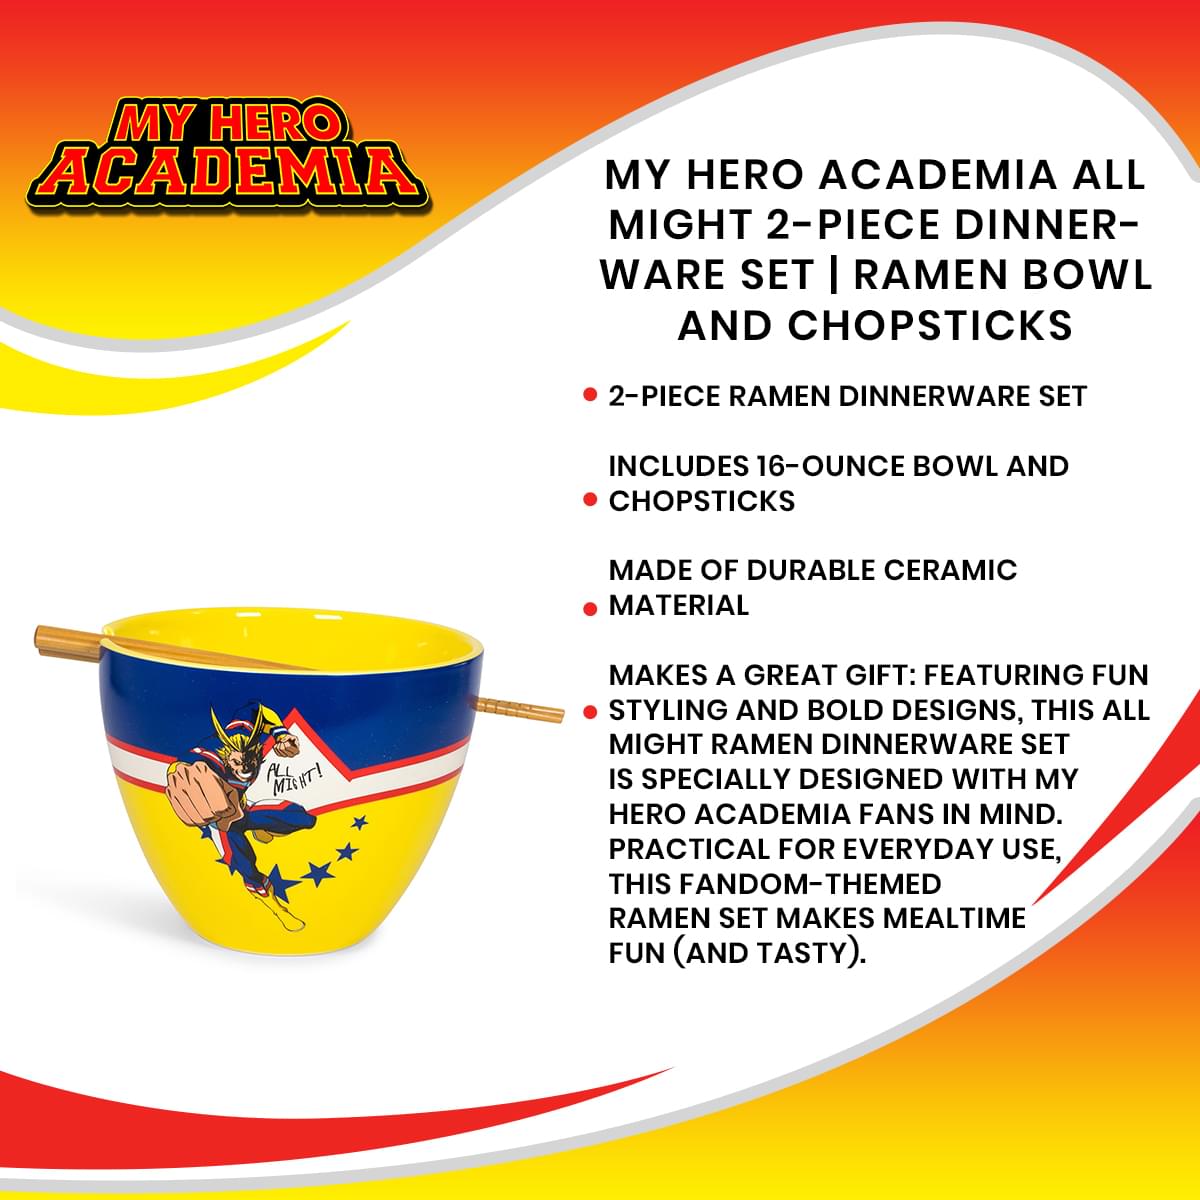 My Hero Academia All Might Dinnerware Set | 16-Ounce Ramen Bowl and Chopsticks